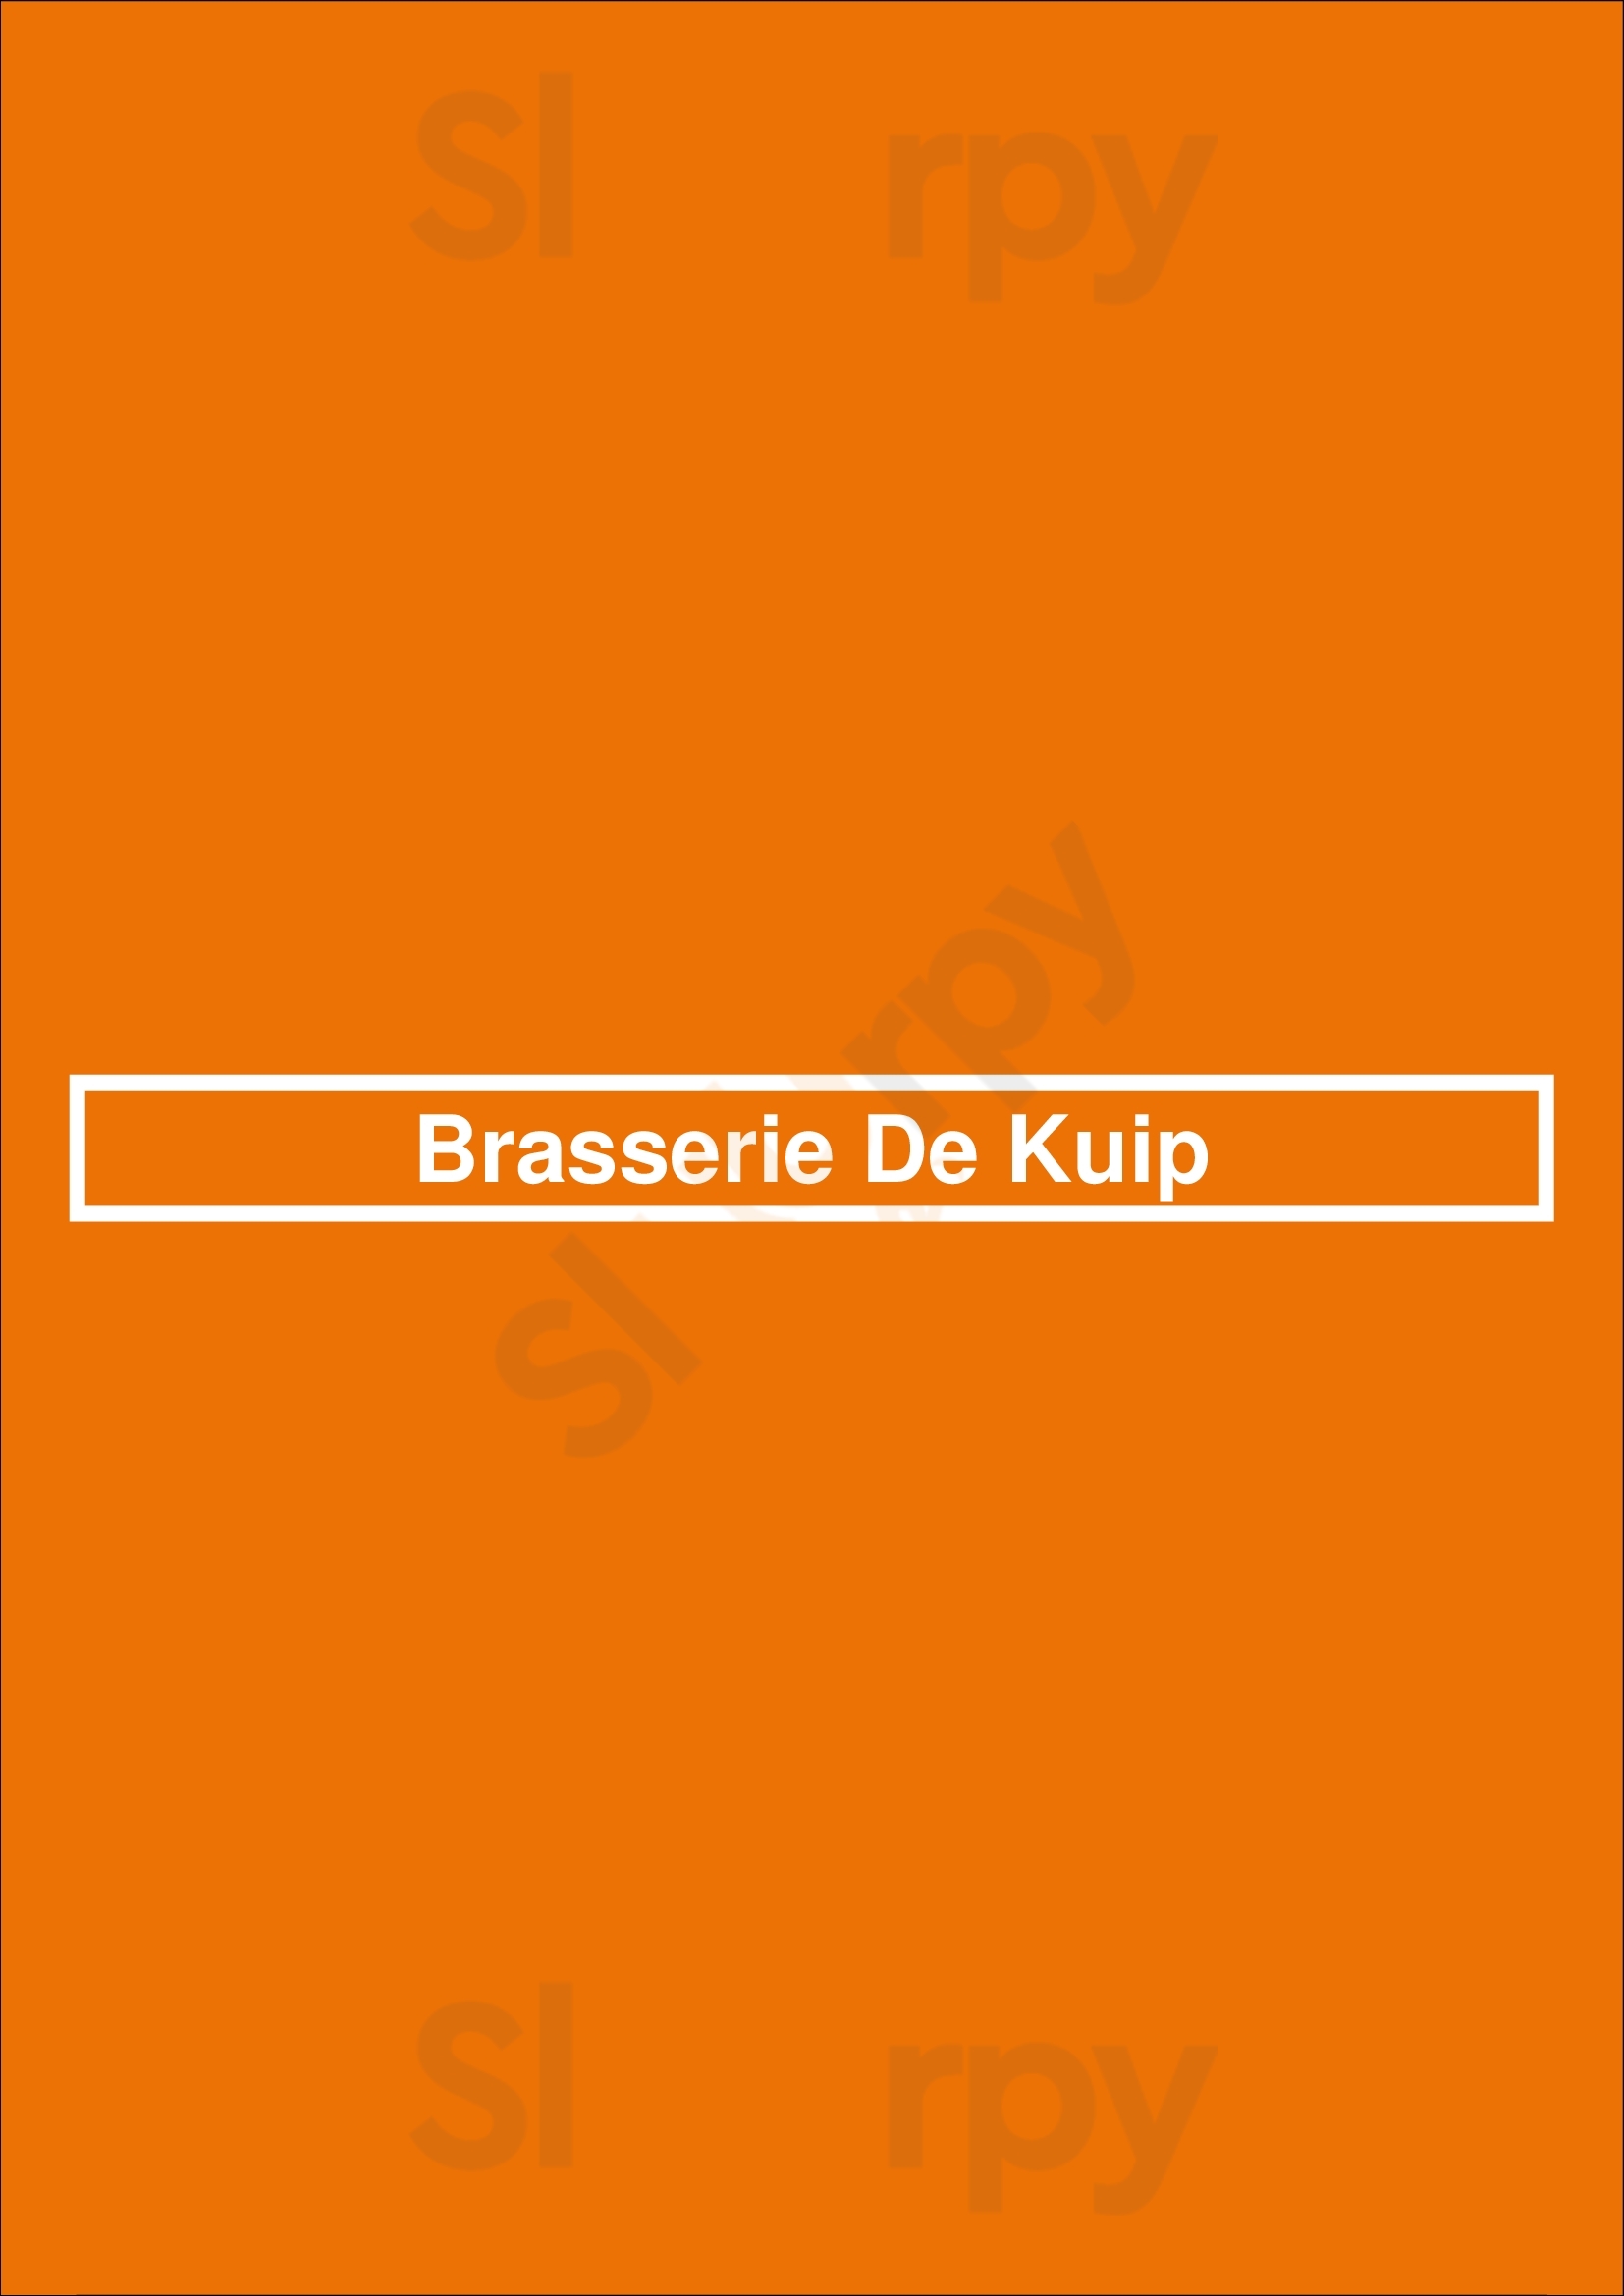 Brasserie De Kuip Rotterdam Menu - 1